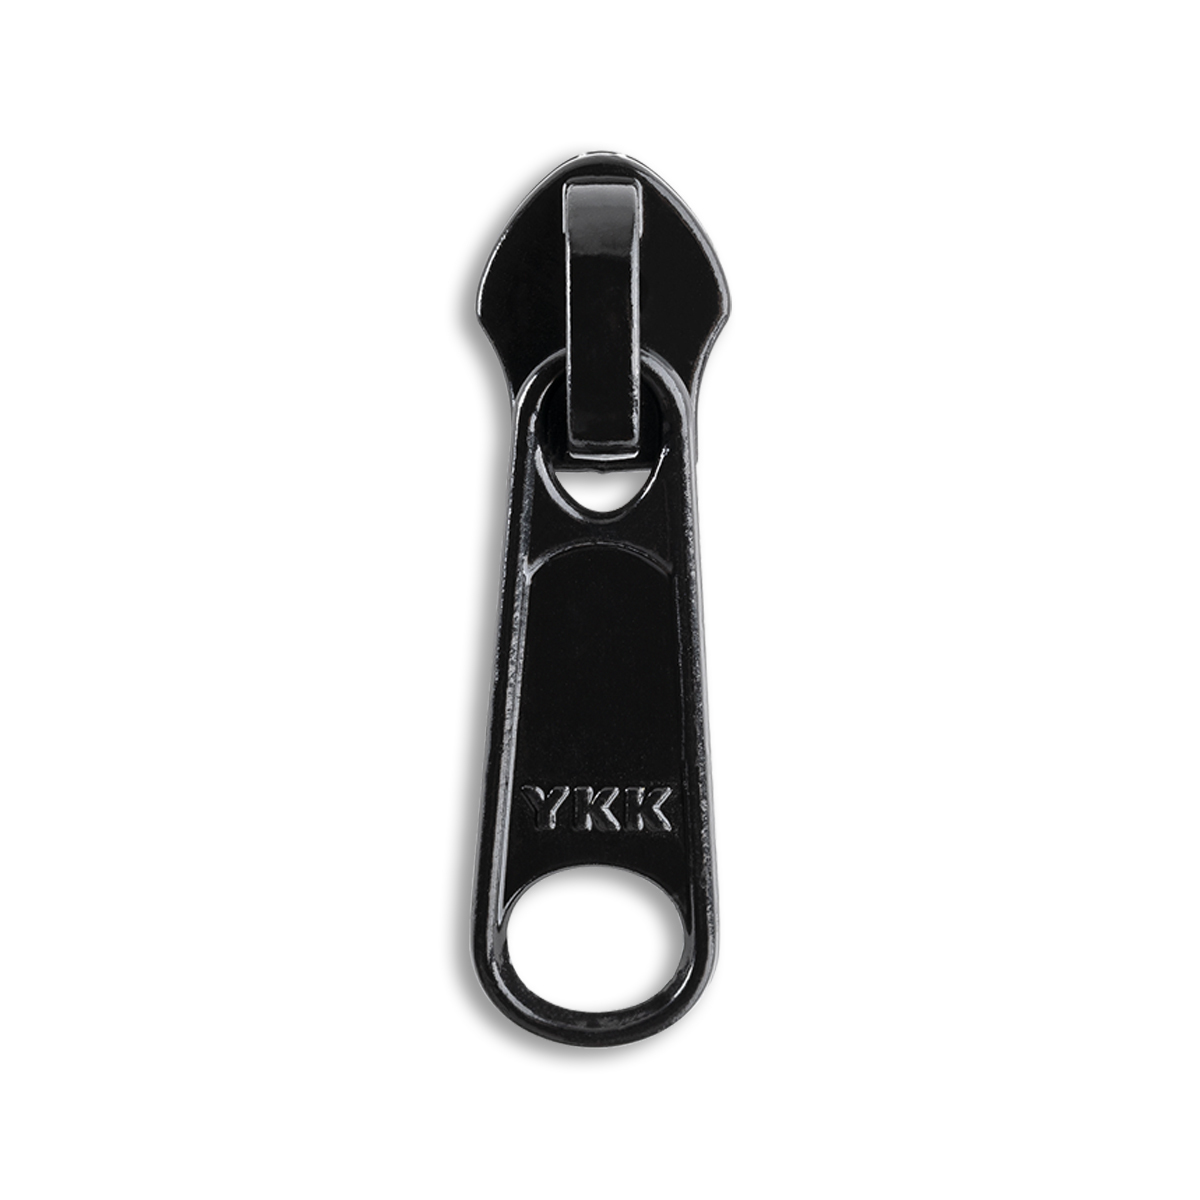 10 YKK Ziplon (coil) Slides, Continuous Zippers: Sailmaker's Supply